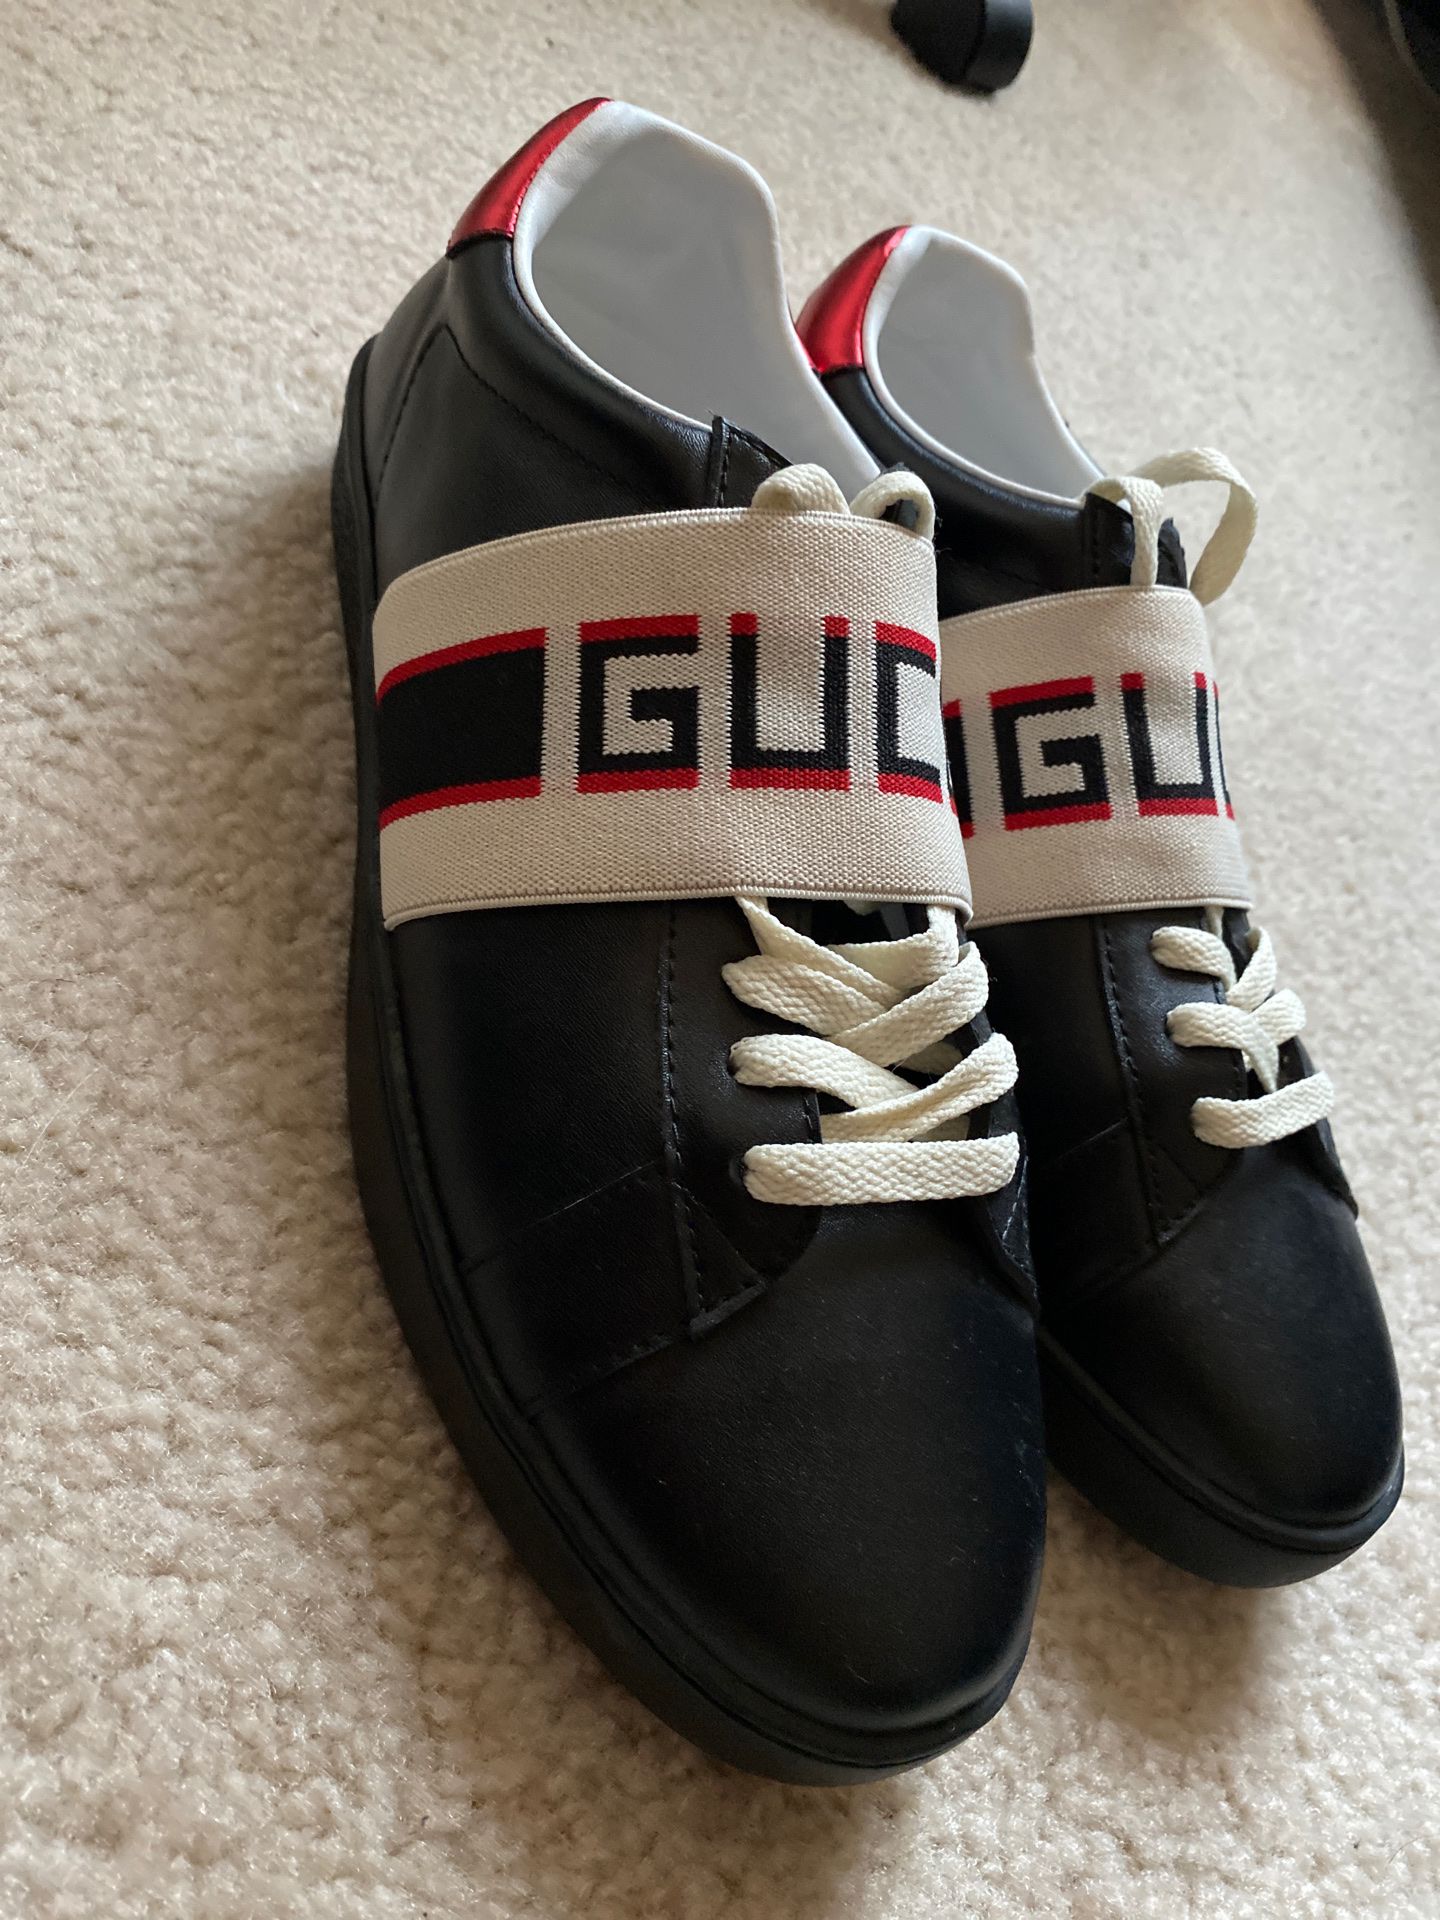 Gucci Strap shoes black size 9.5